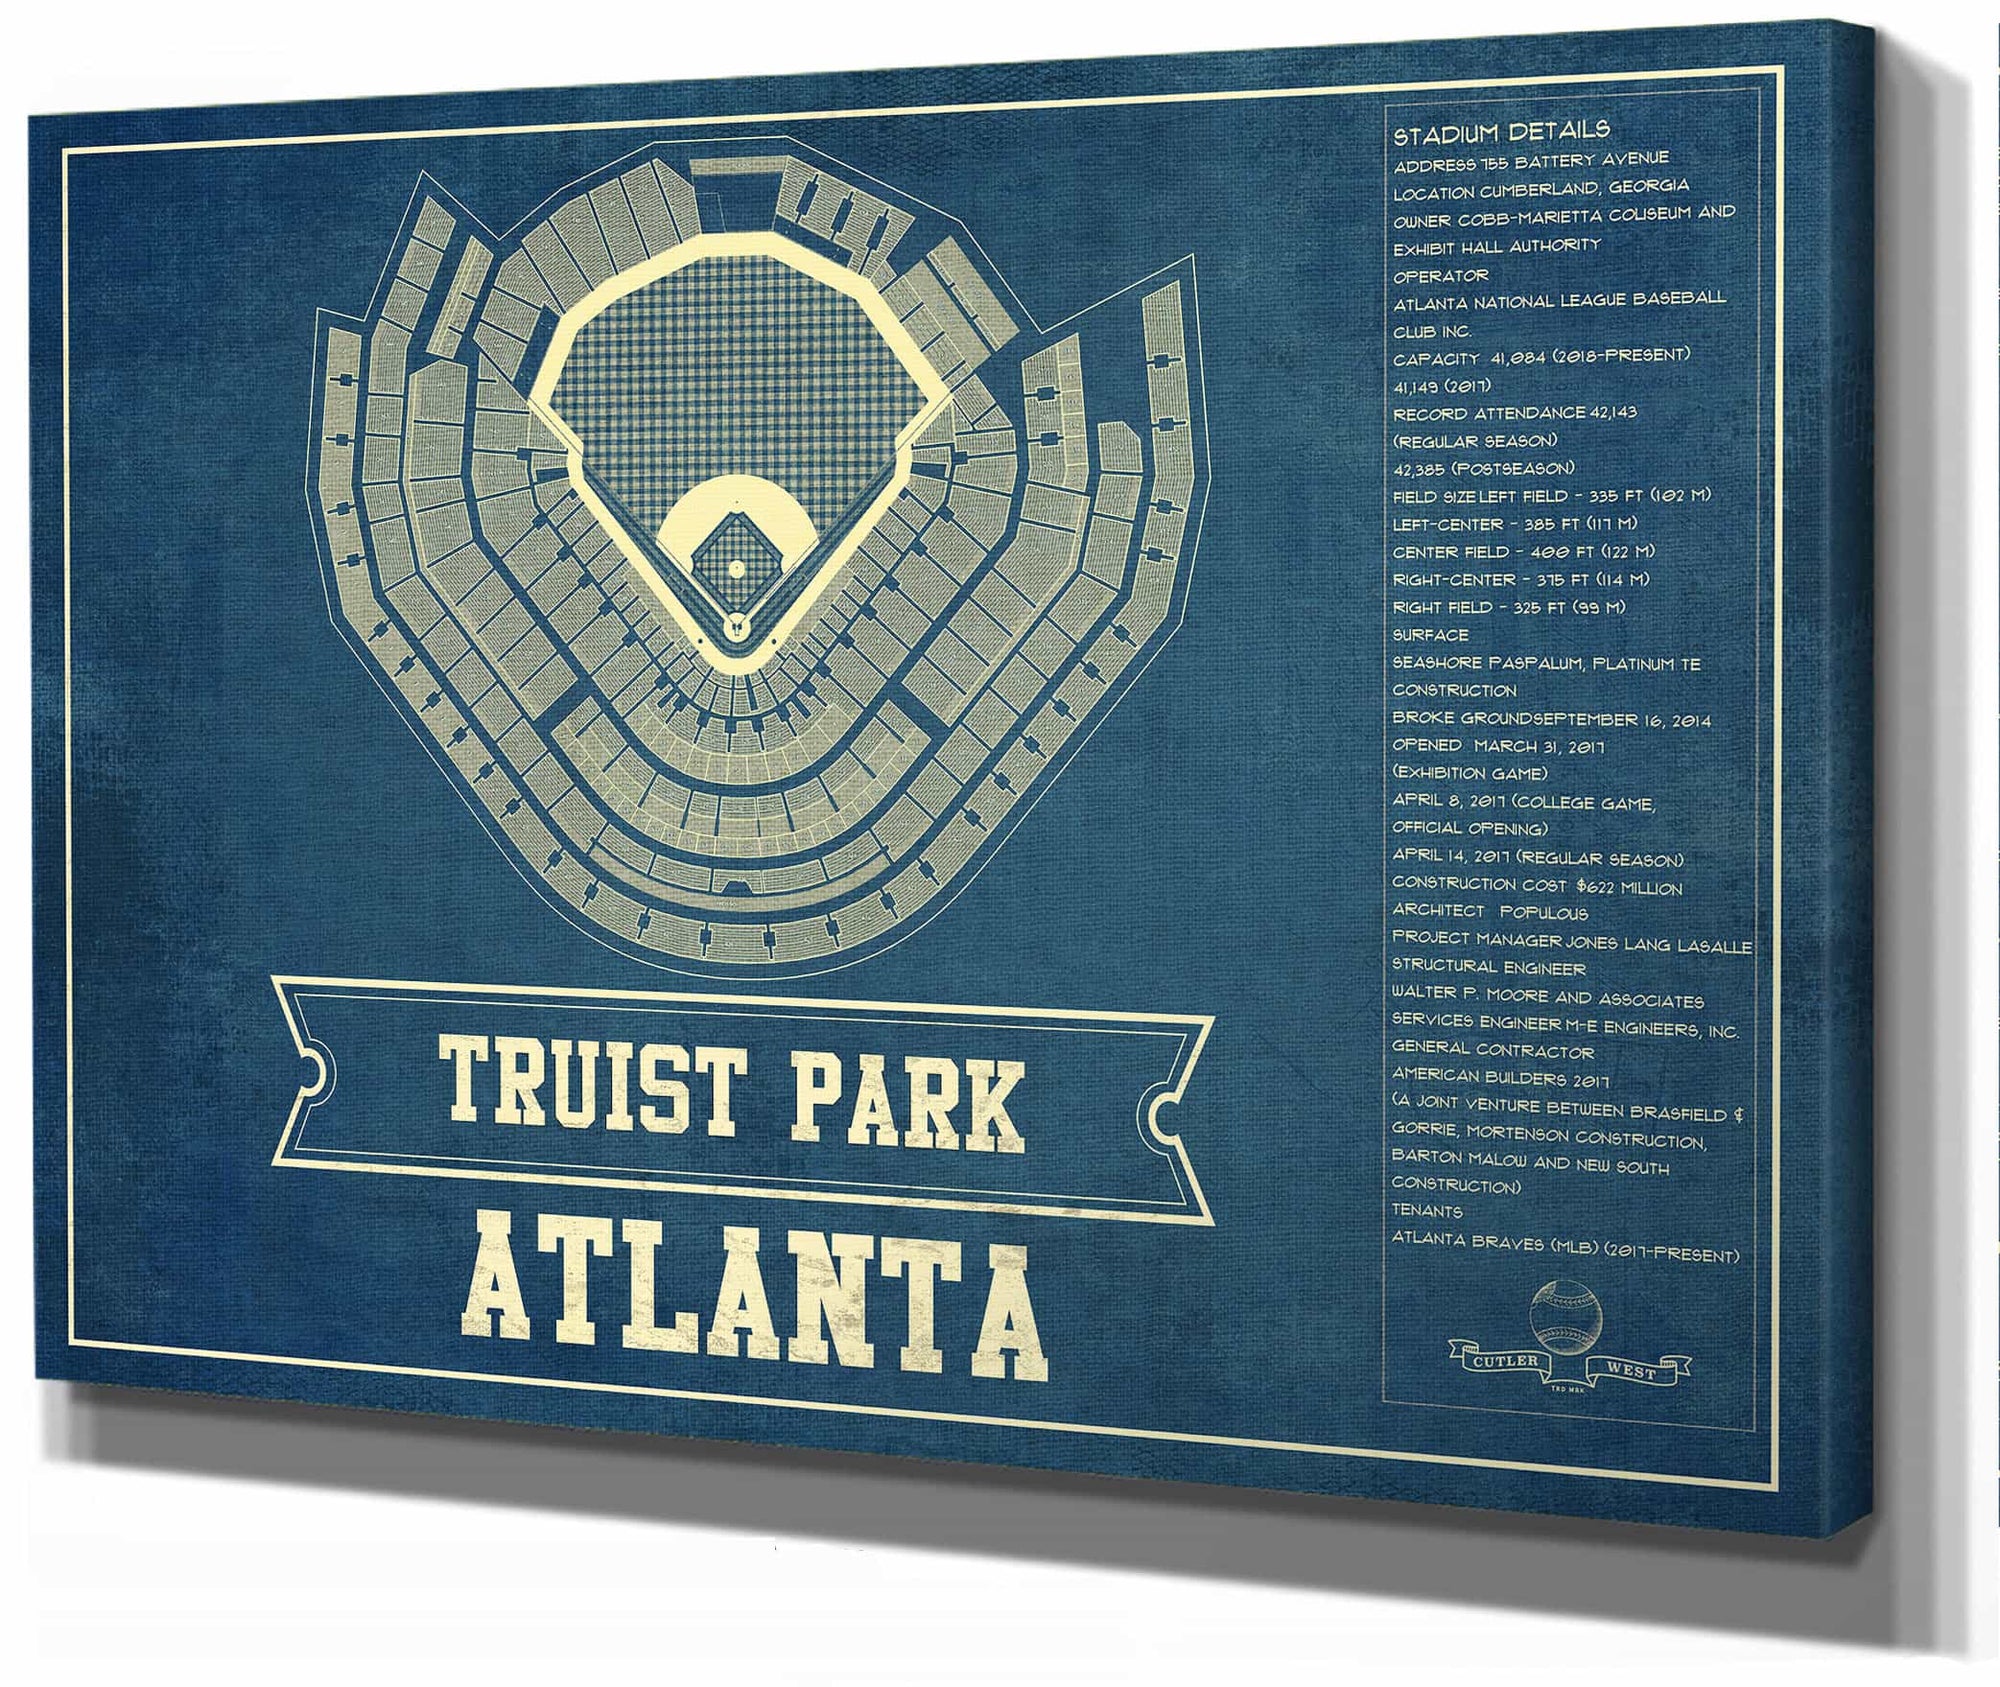 Turner Field - Atlanta Braves MLB Vintage Baseball Print